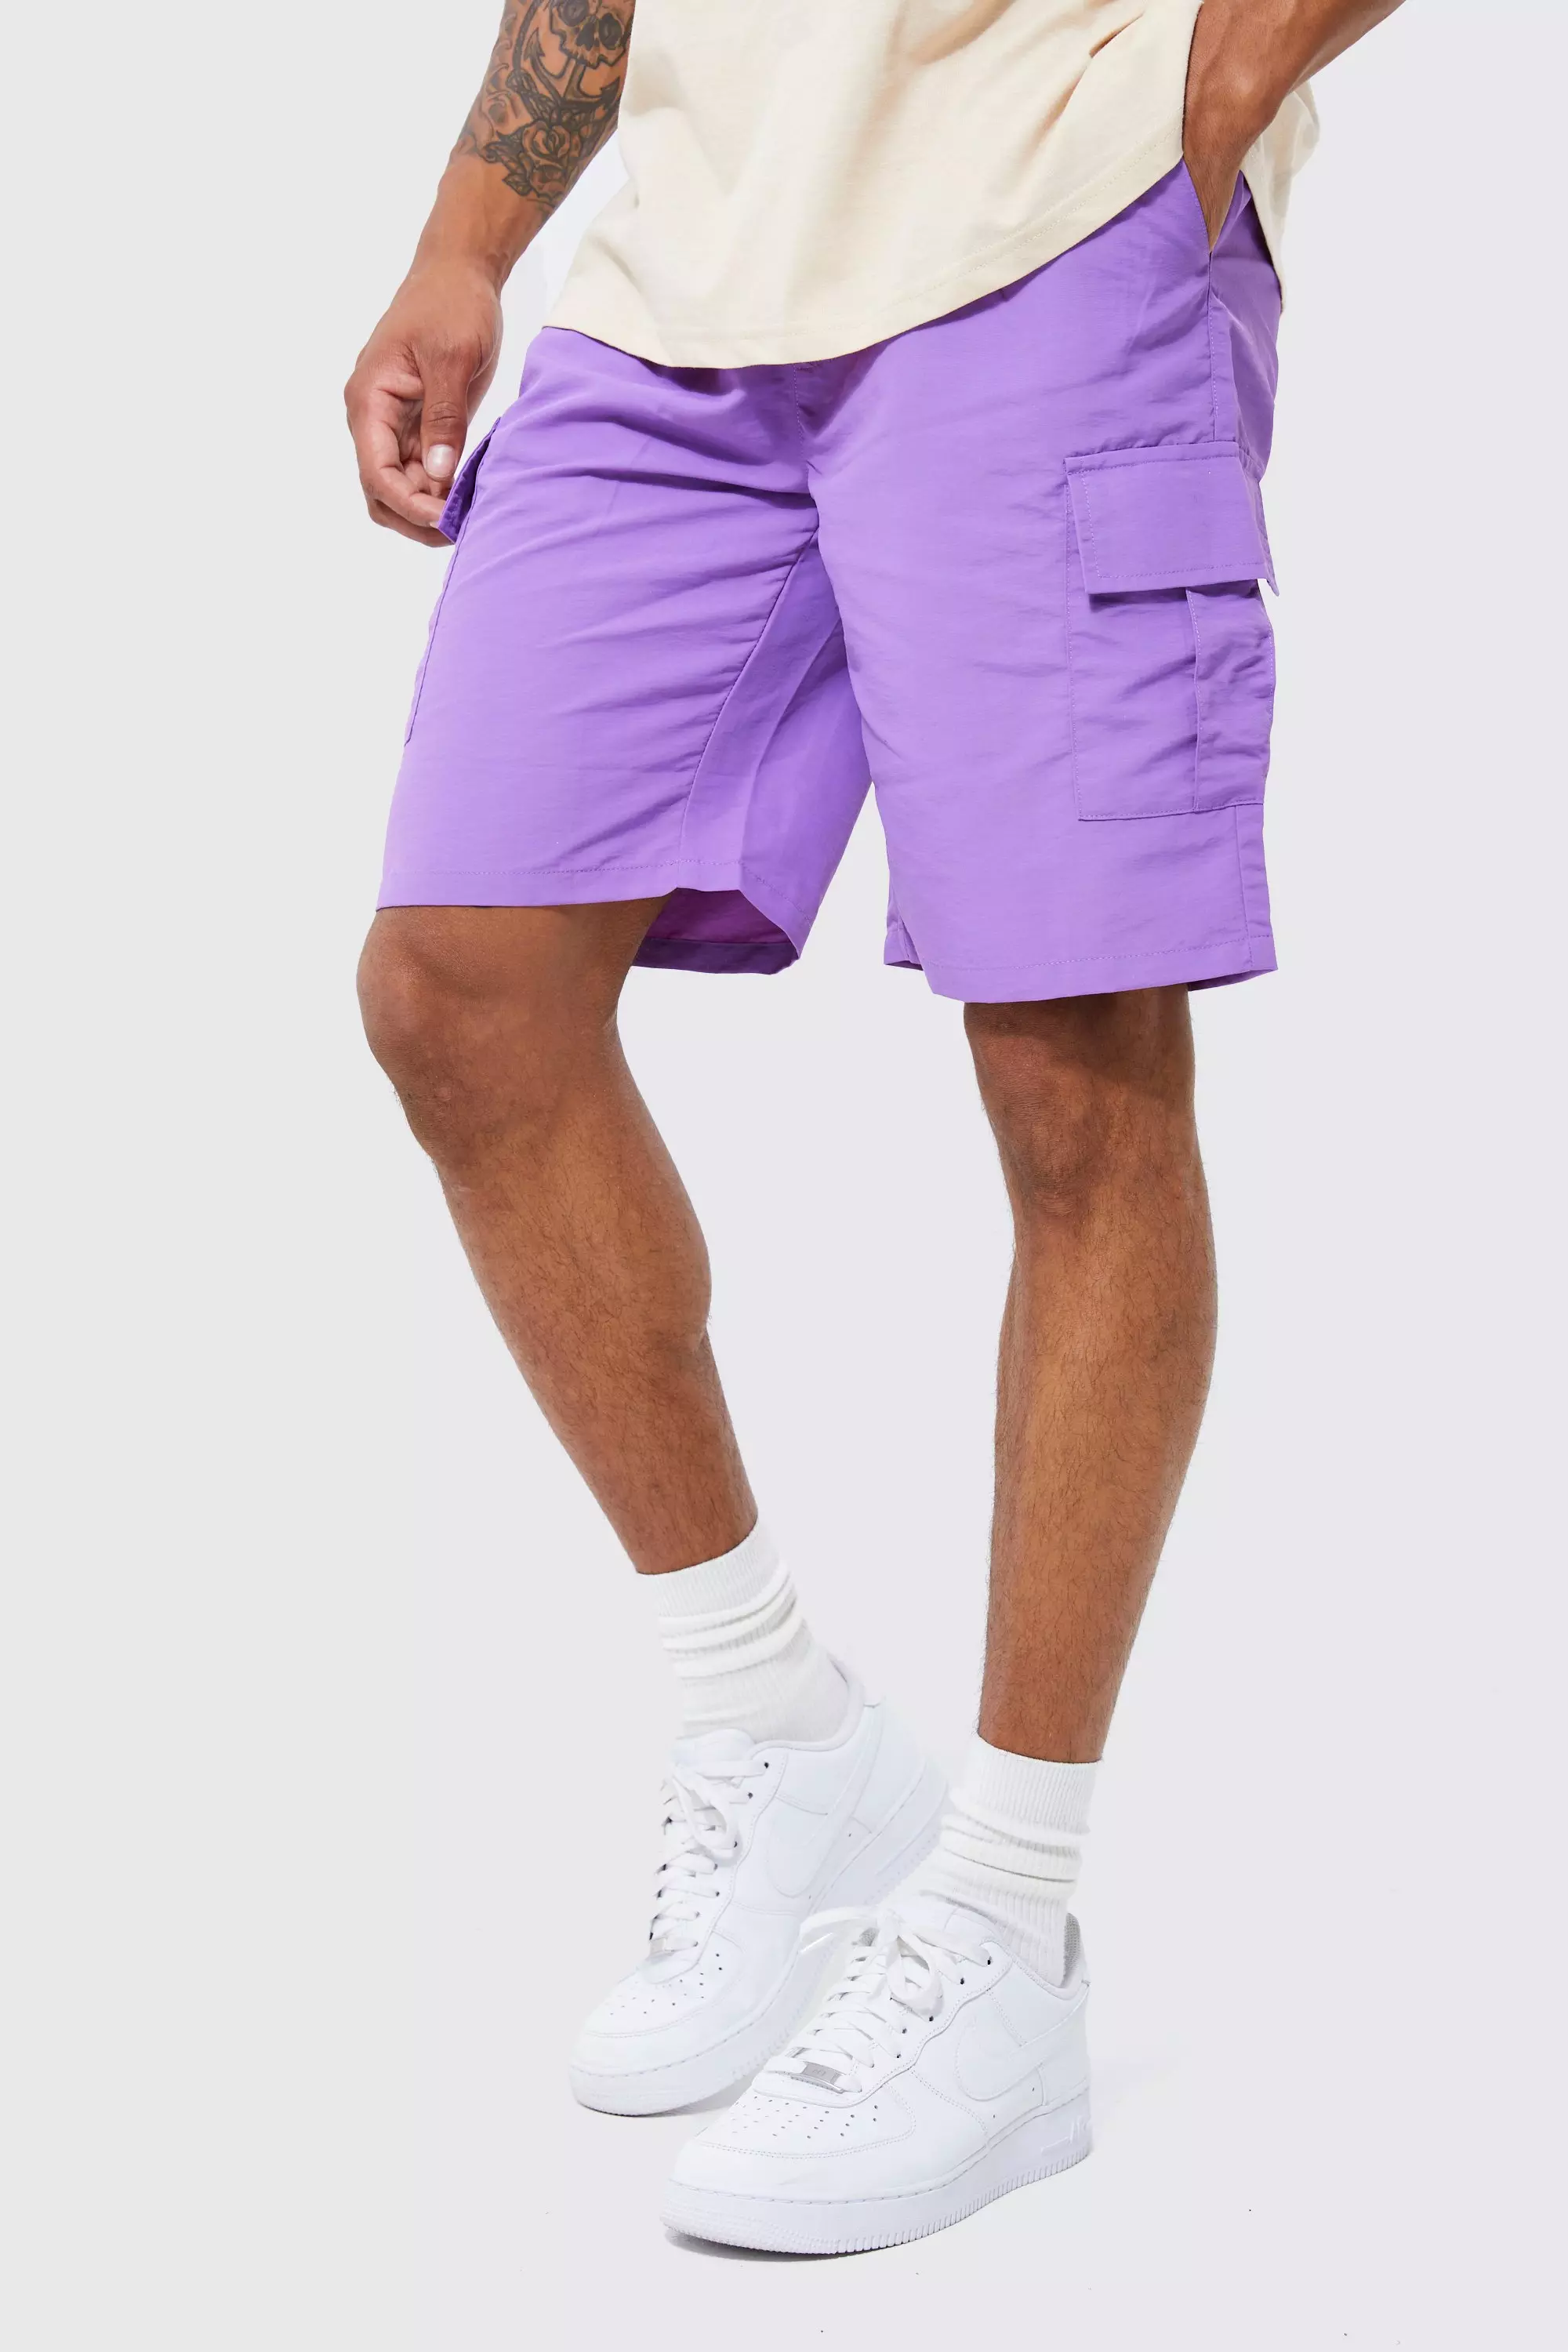 purple cargo shorts